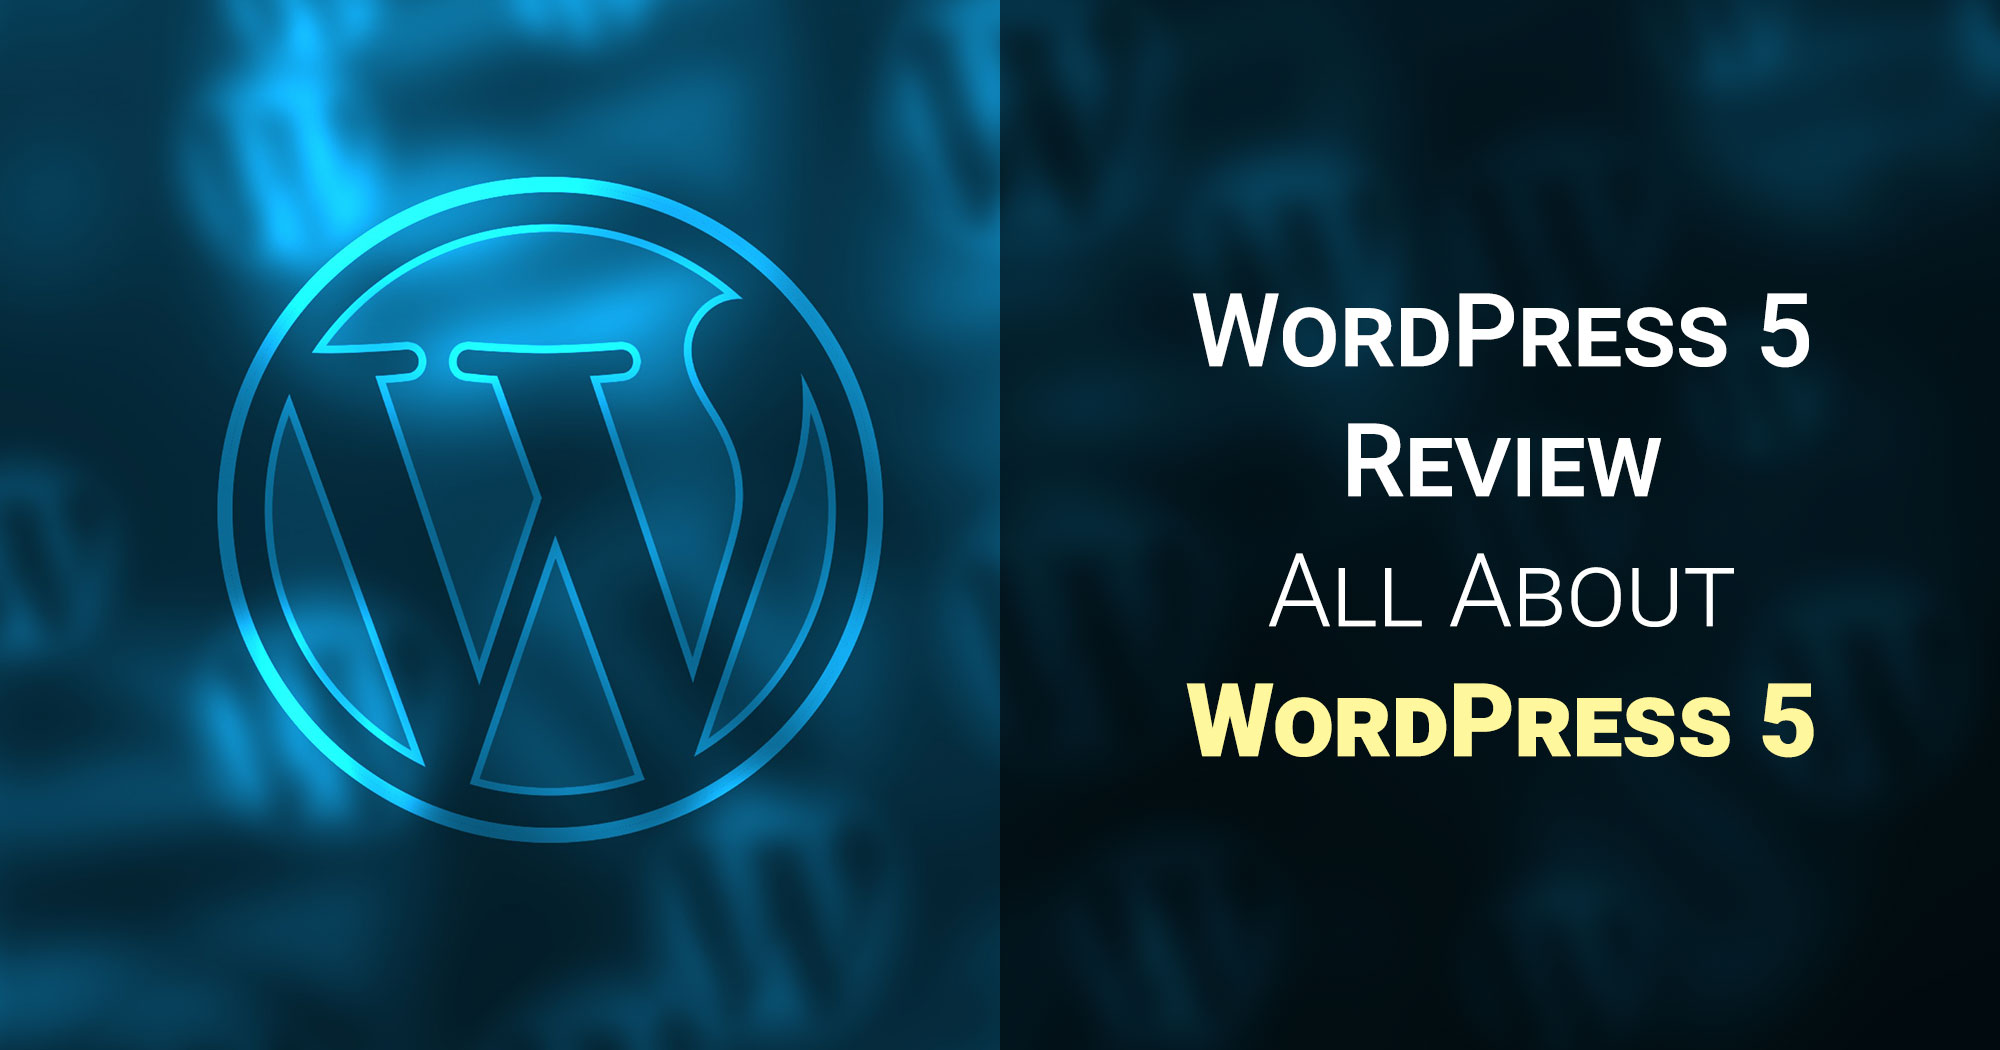 WordPress 5 Review